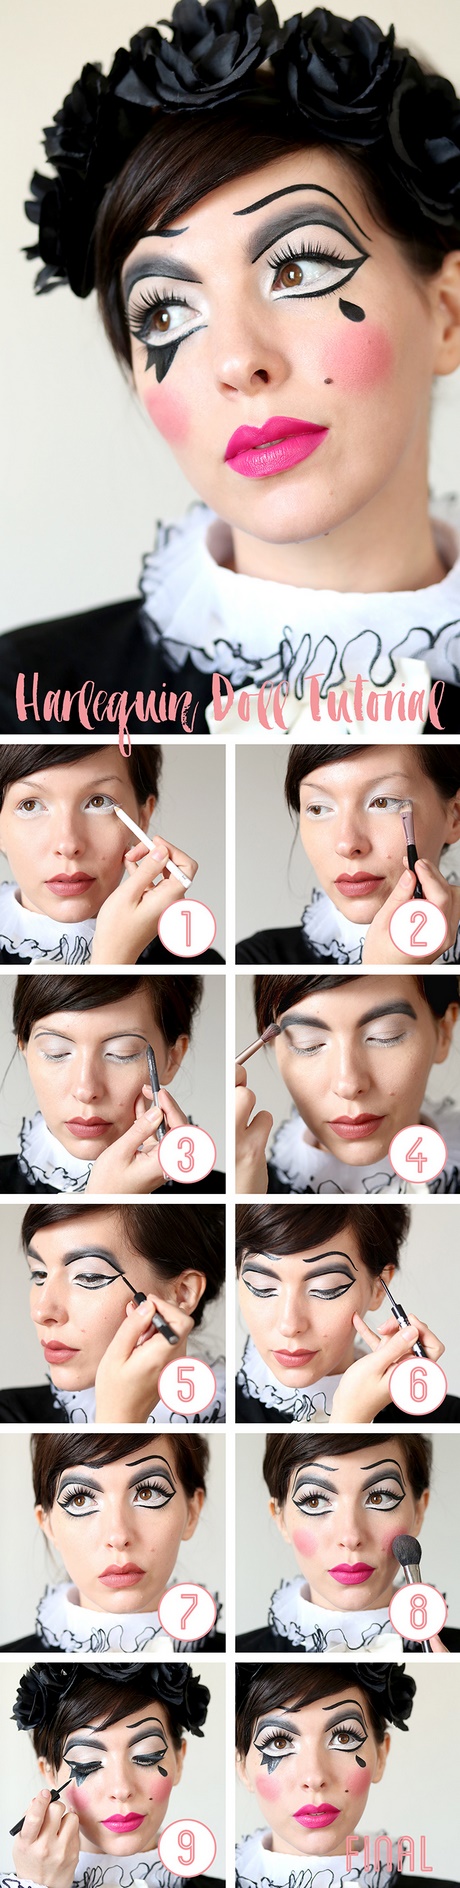 suzy-bishop-makeup-tutorial-84_10 Suzy bishop make-up tutorial